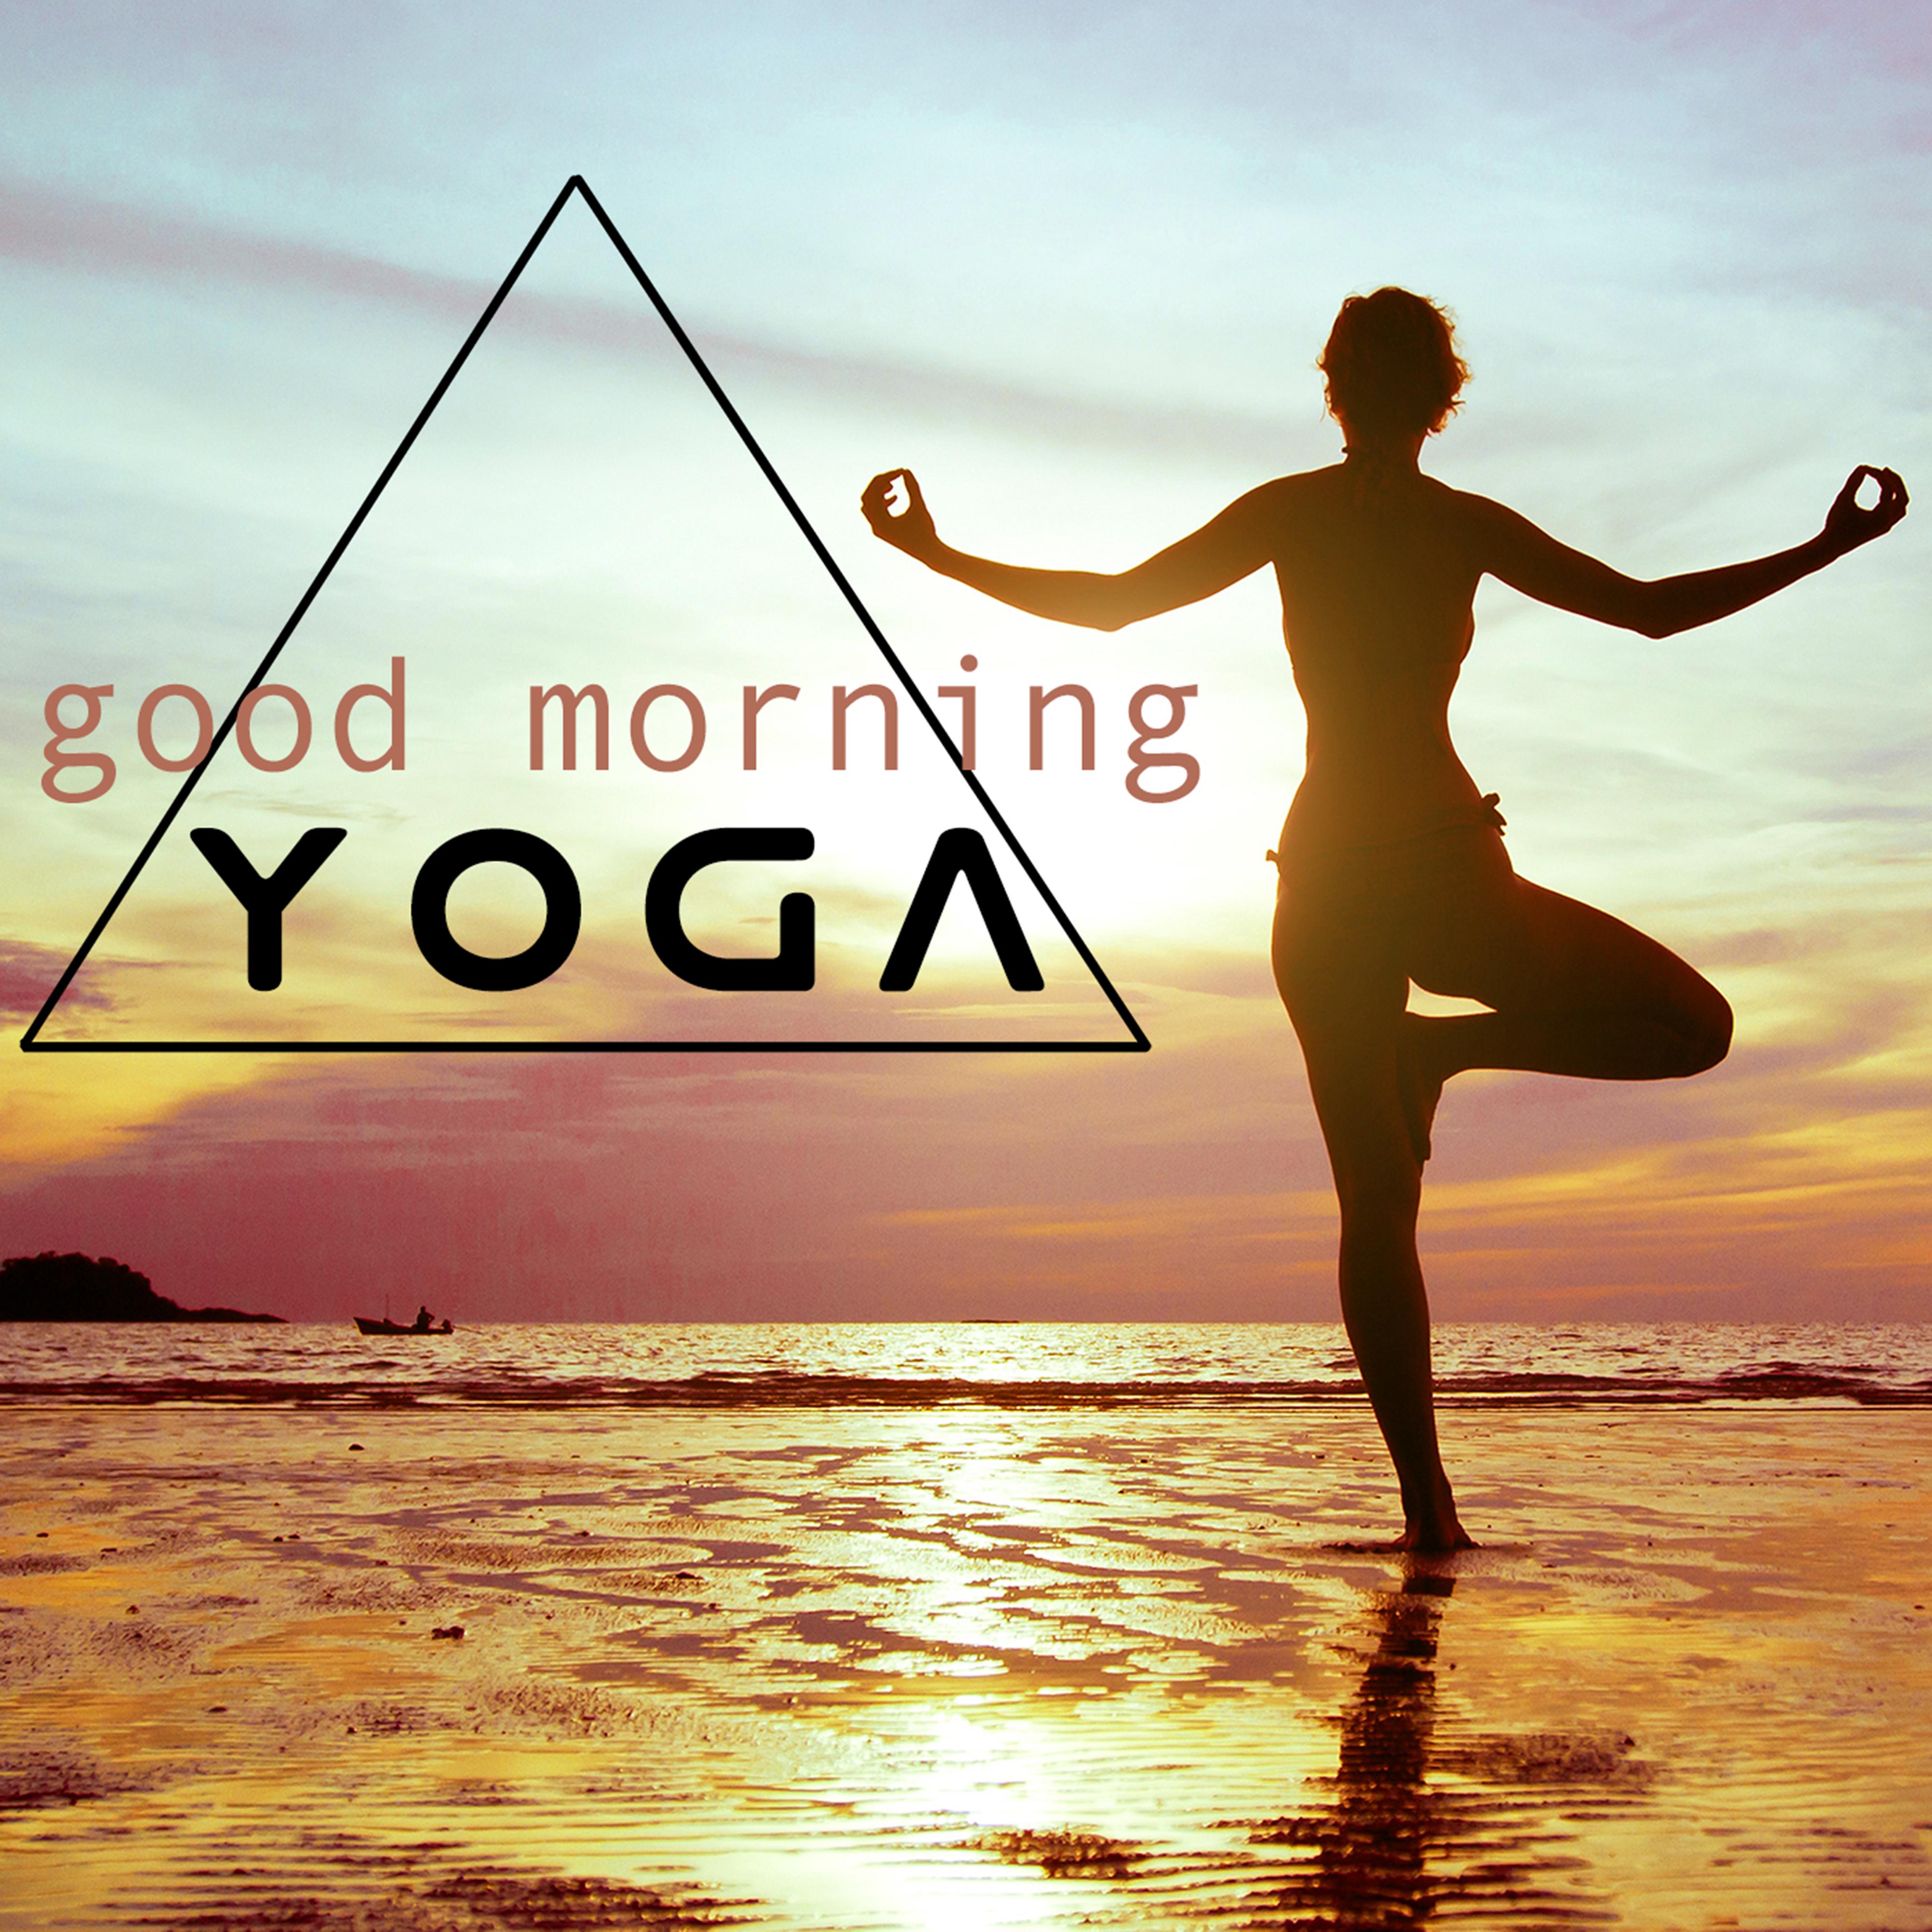 Good Morning Yoga - Morning Yoga Songs and Yoga Meditation Music